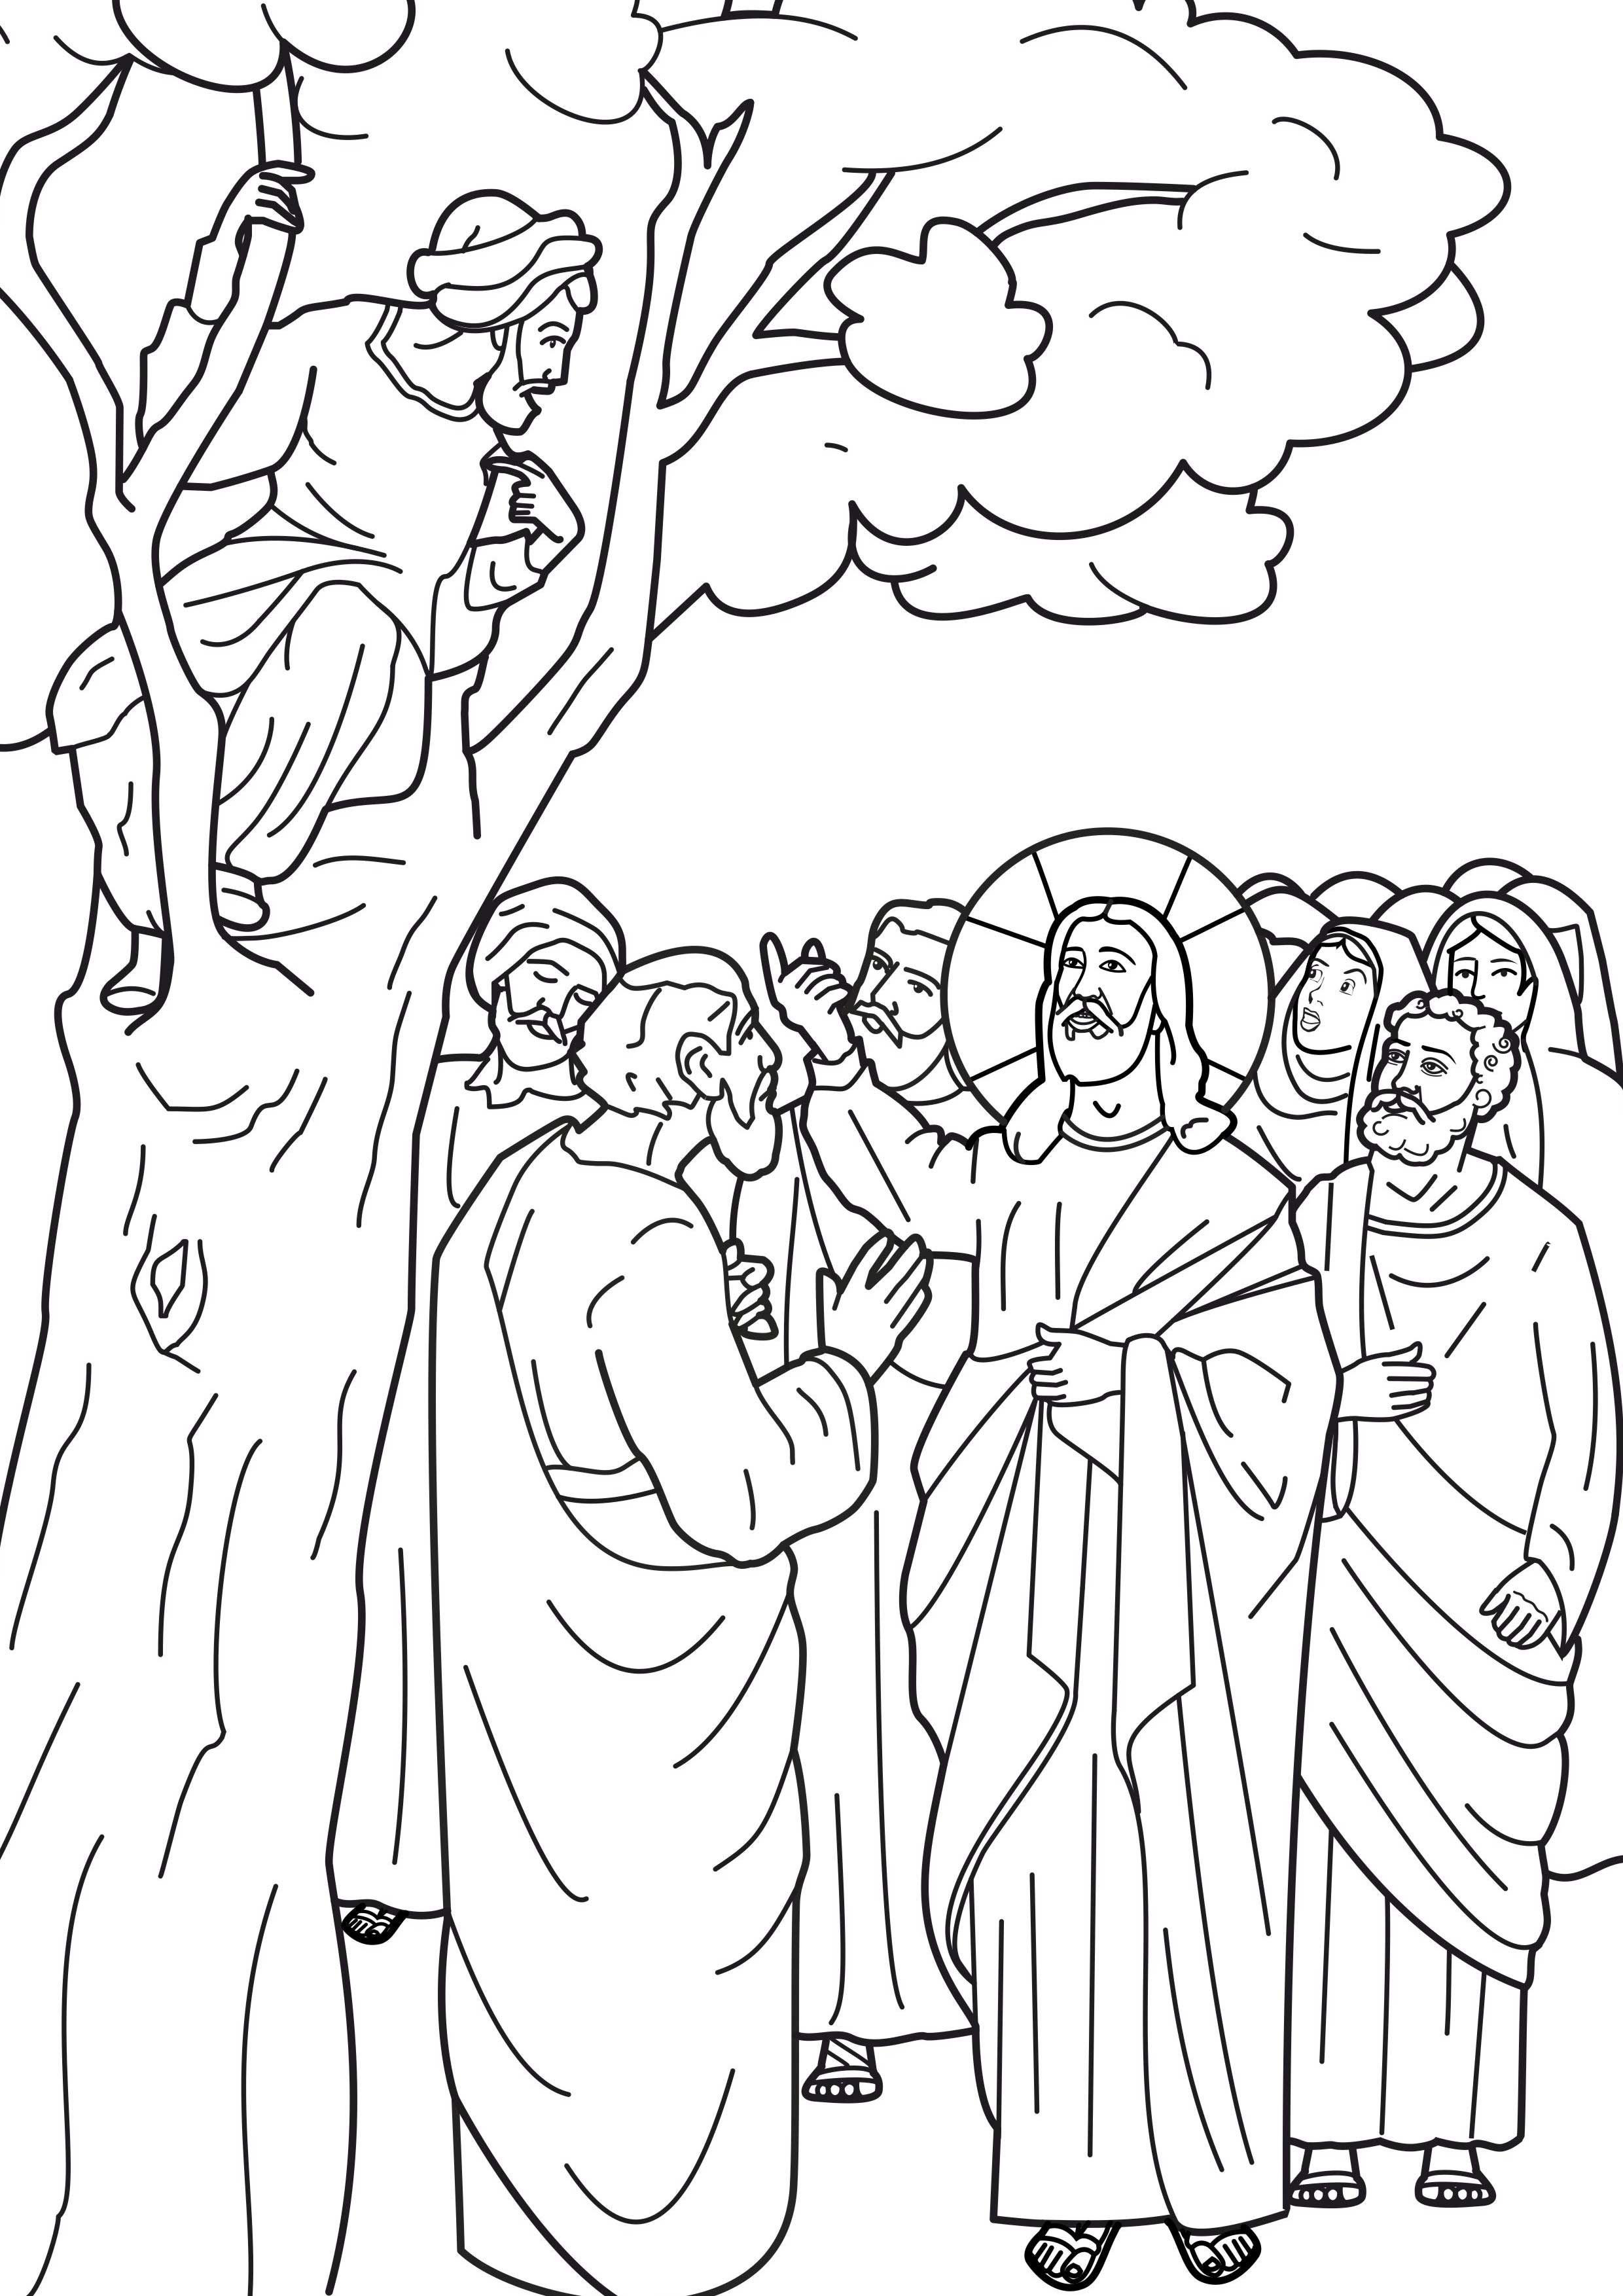 zacchaeus coloring pages printable - photo #19